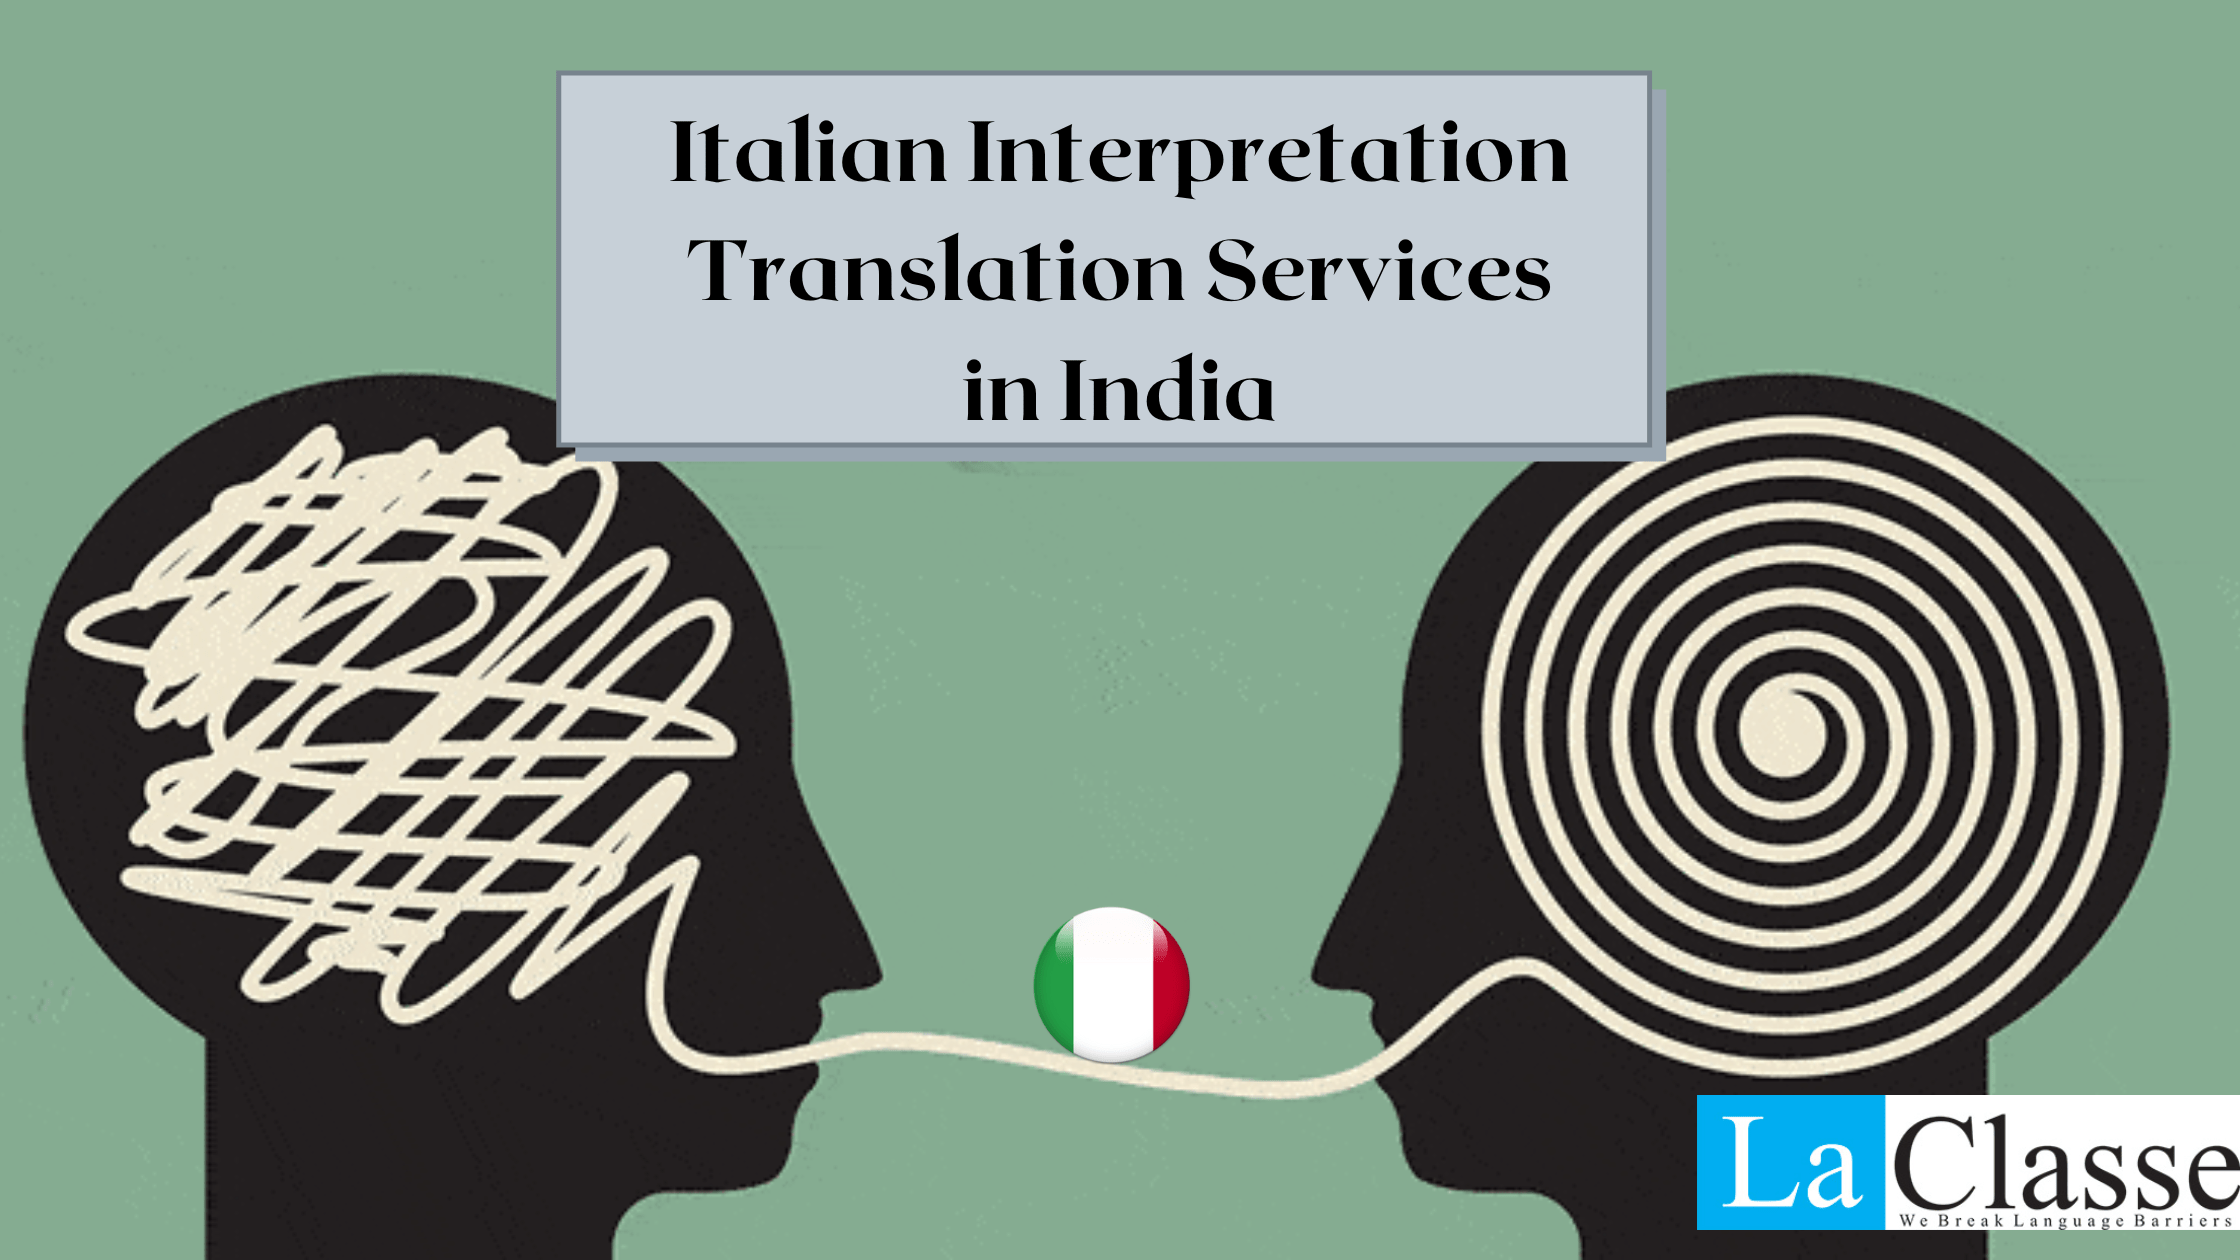 Italian Interpretation Translation Services in India